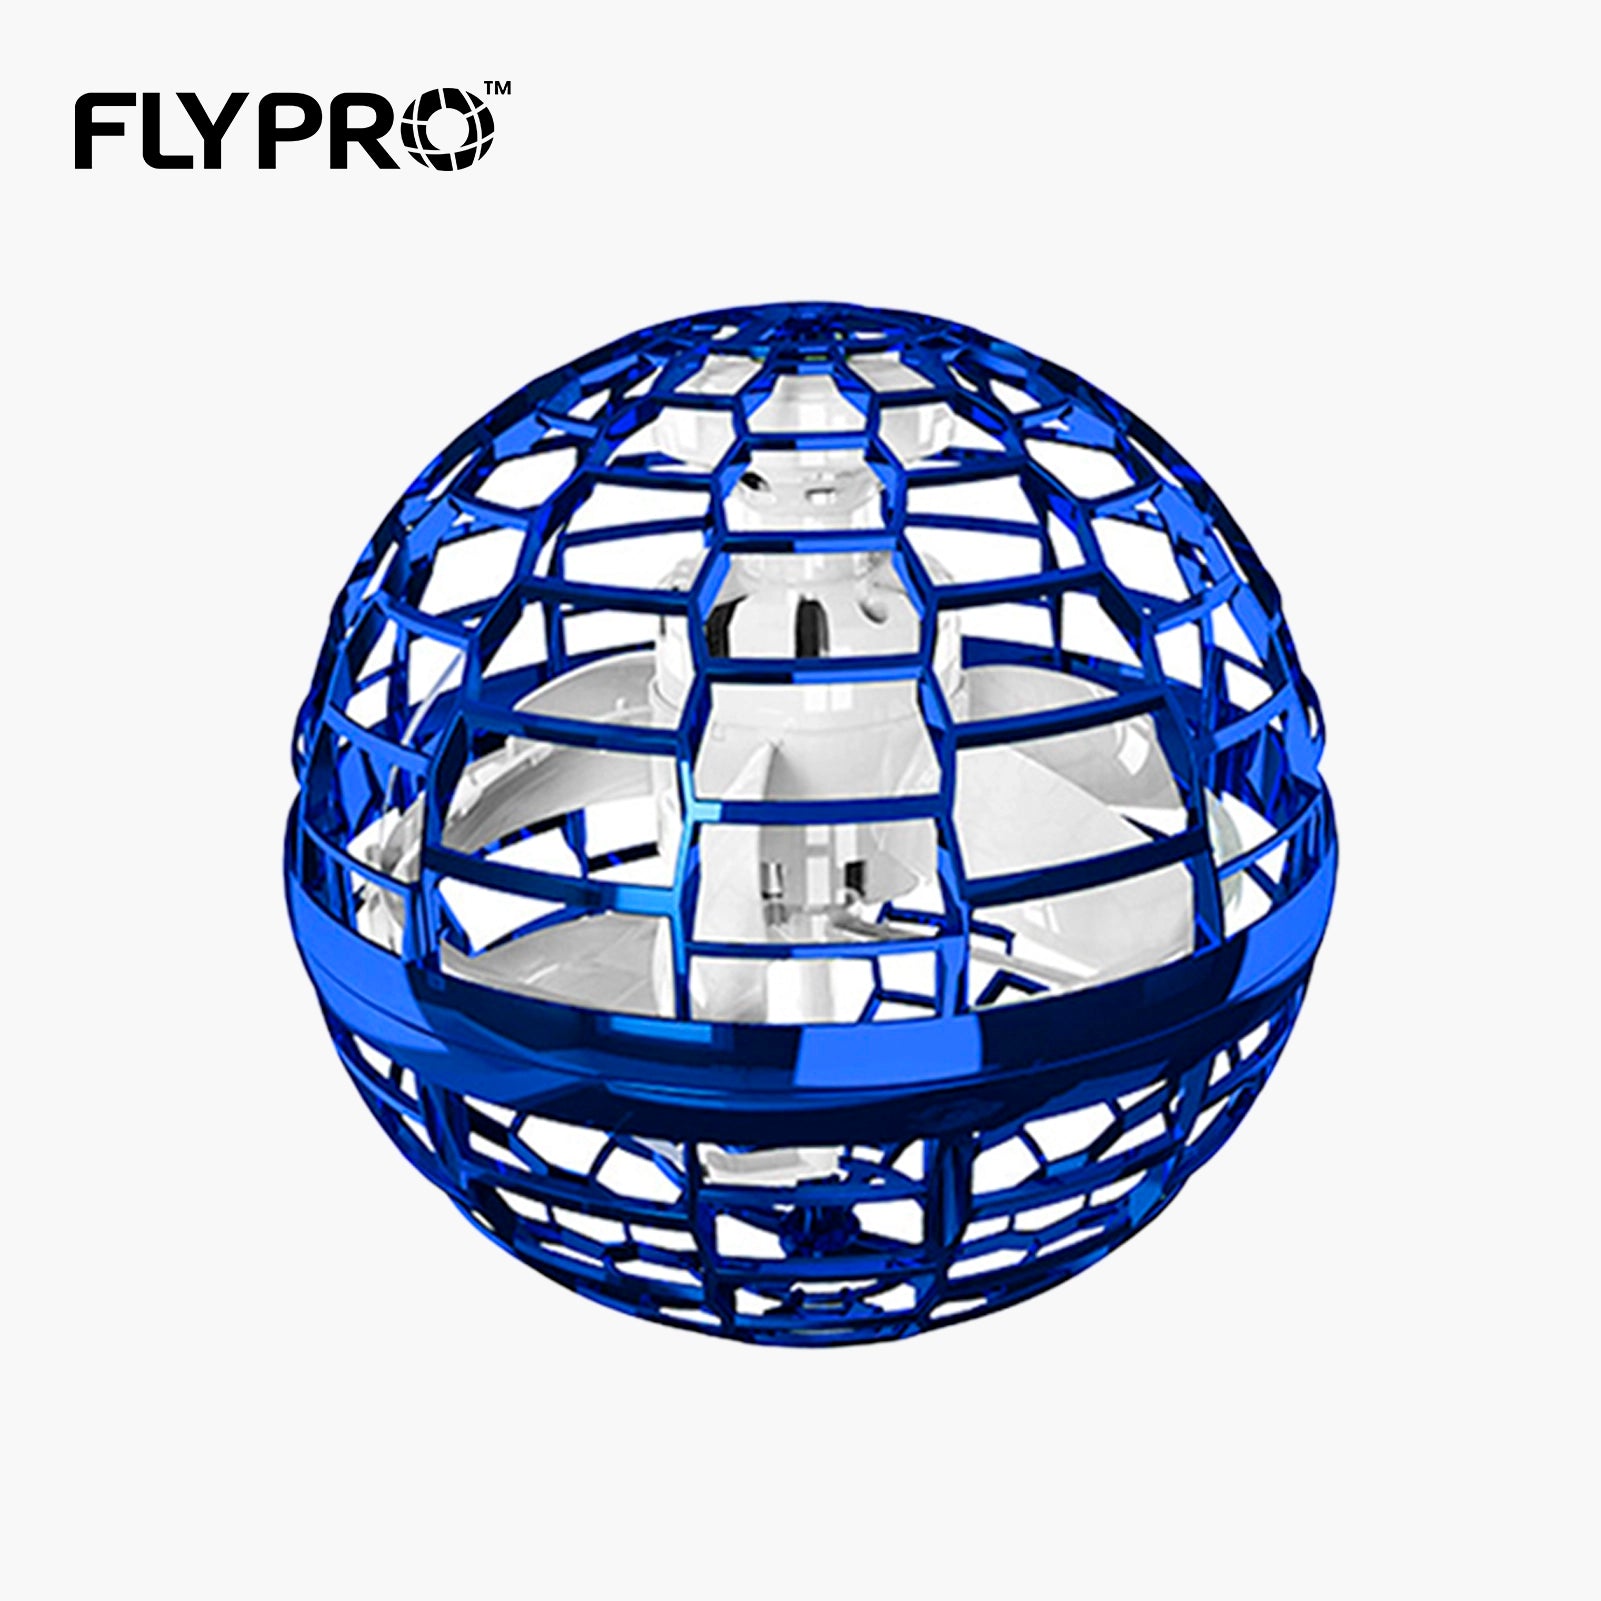 FlyPro Boomerang Drone